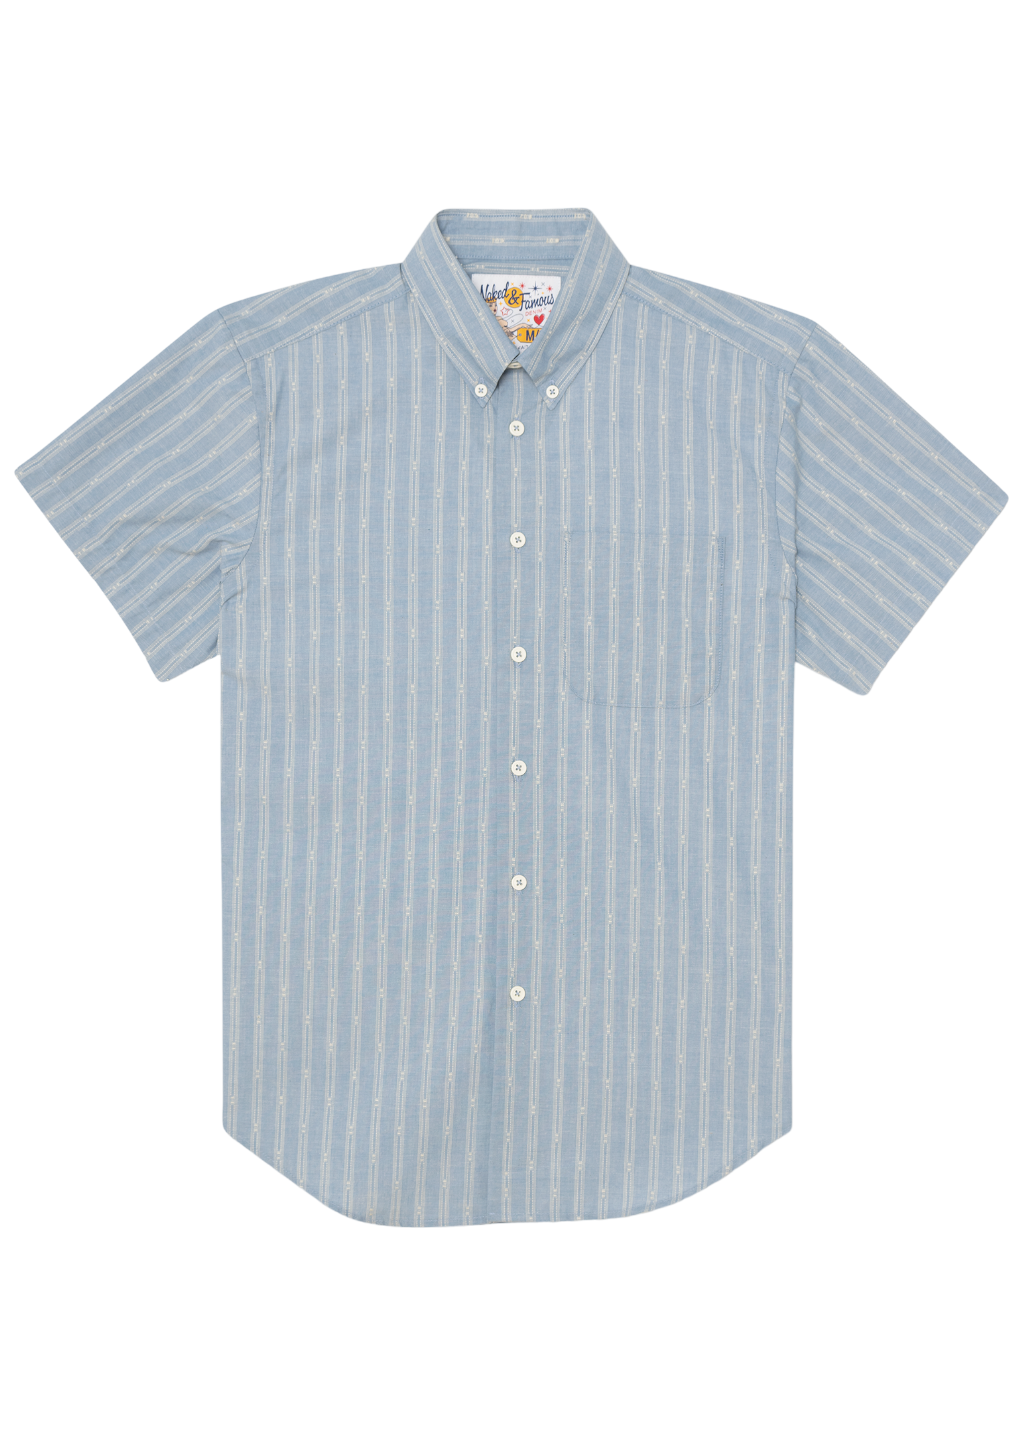 Naked & Famous Denim - Short Sleeve Easy Shirt - Vintage Dobby Stripes - Pale Blue - Hardpressed Print Studio Inc.